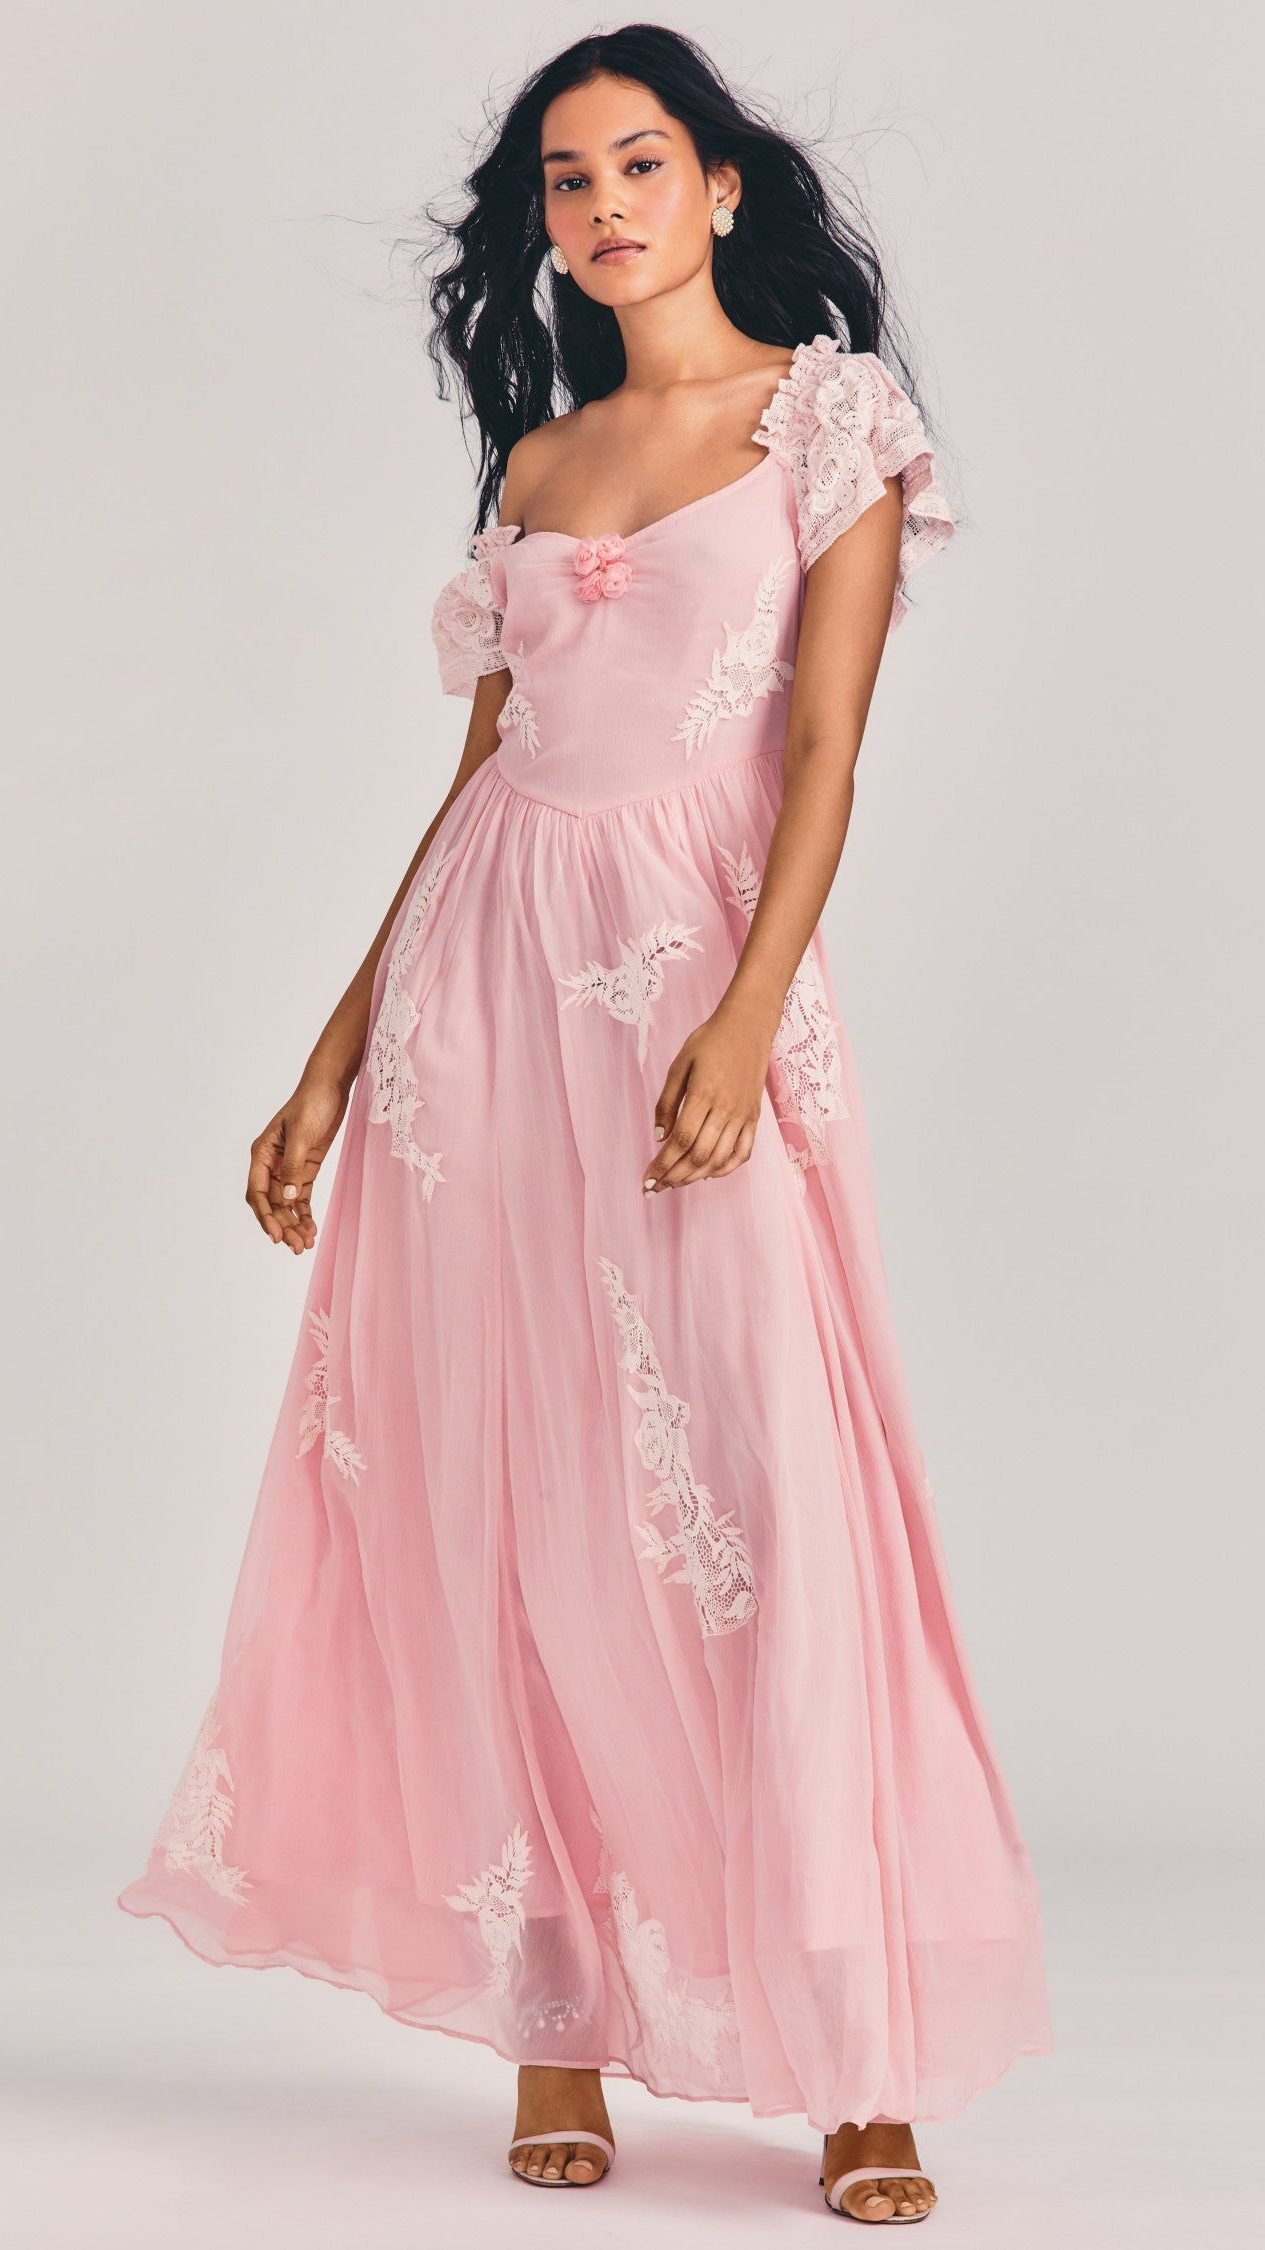 sharma-bridgerton-inspired-pink-dress-gown_ANNALEIGHDRESS-BLUSHTUTU-loveshakyfancy_the-mood-guide-min-1-edited.jpeg